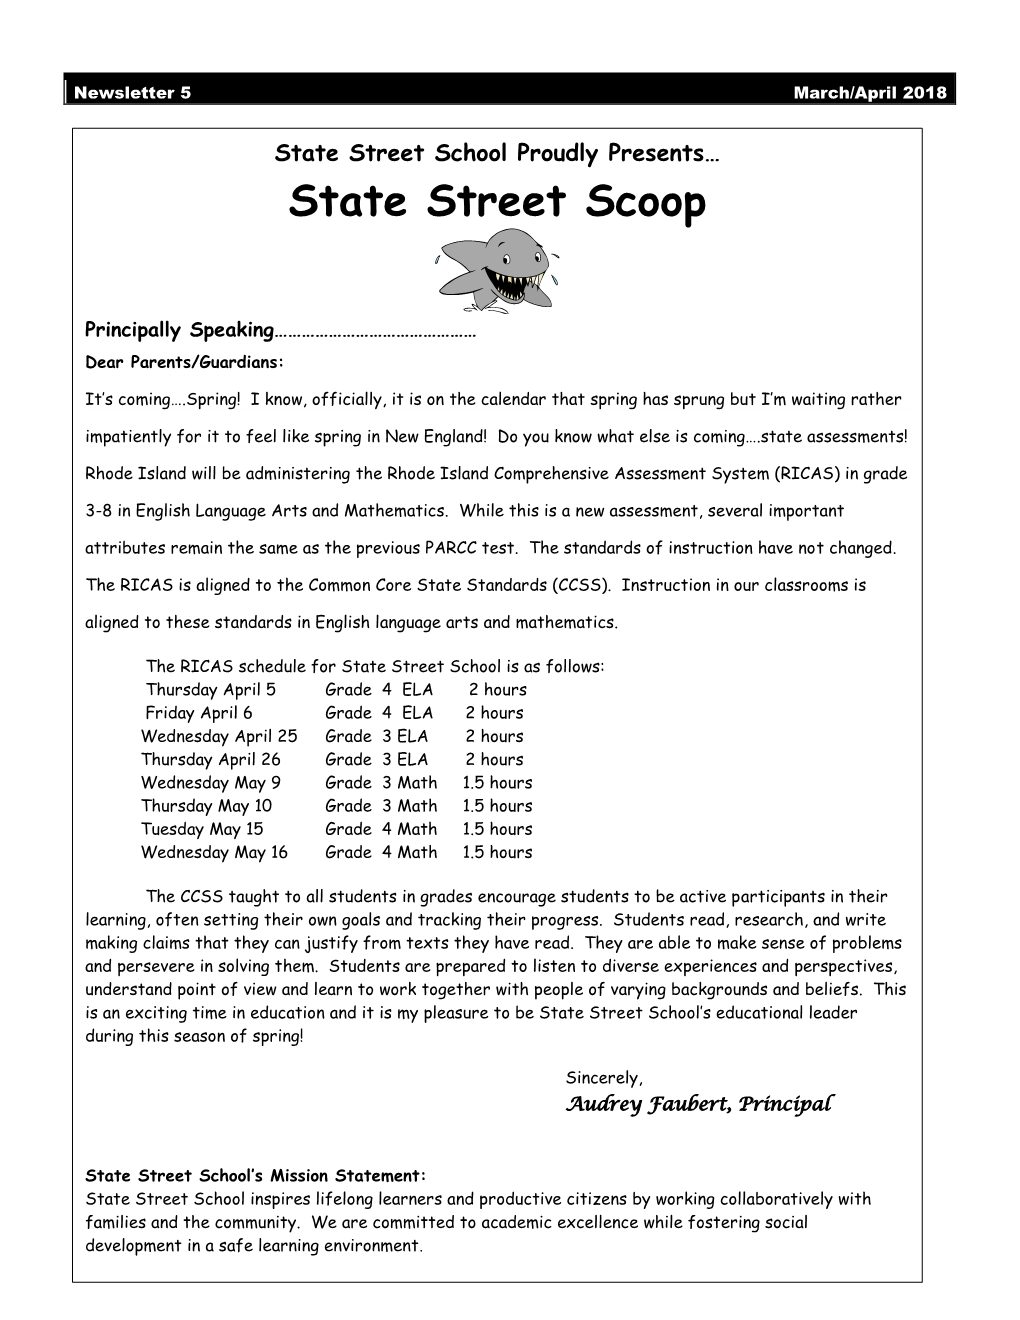 State Street Scoop